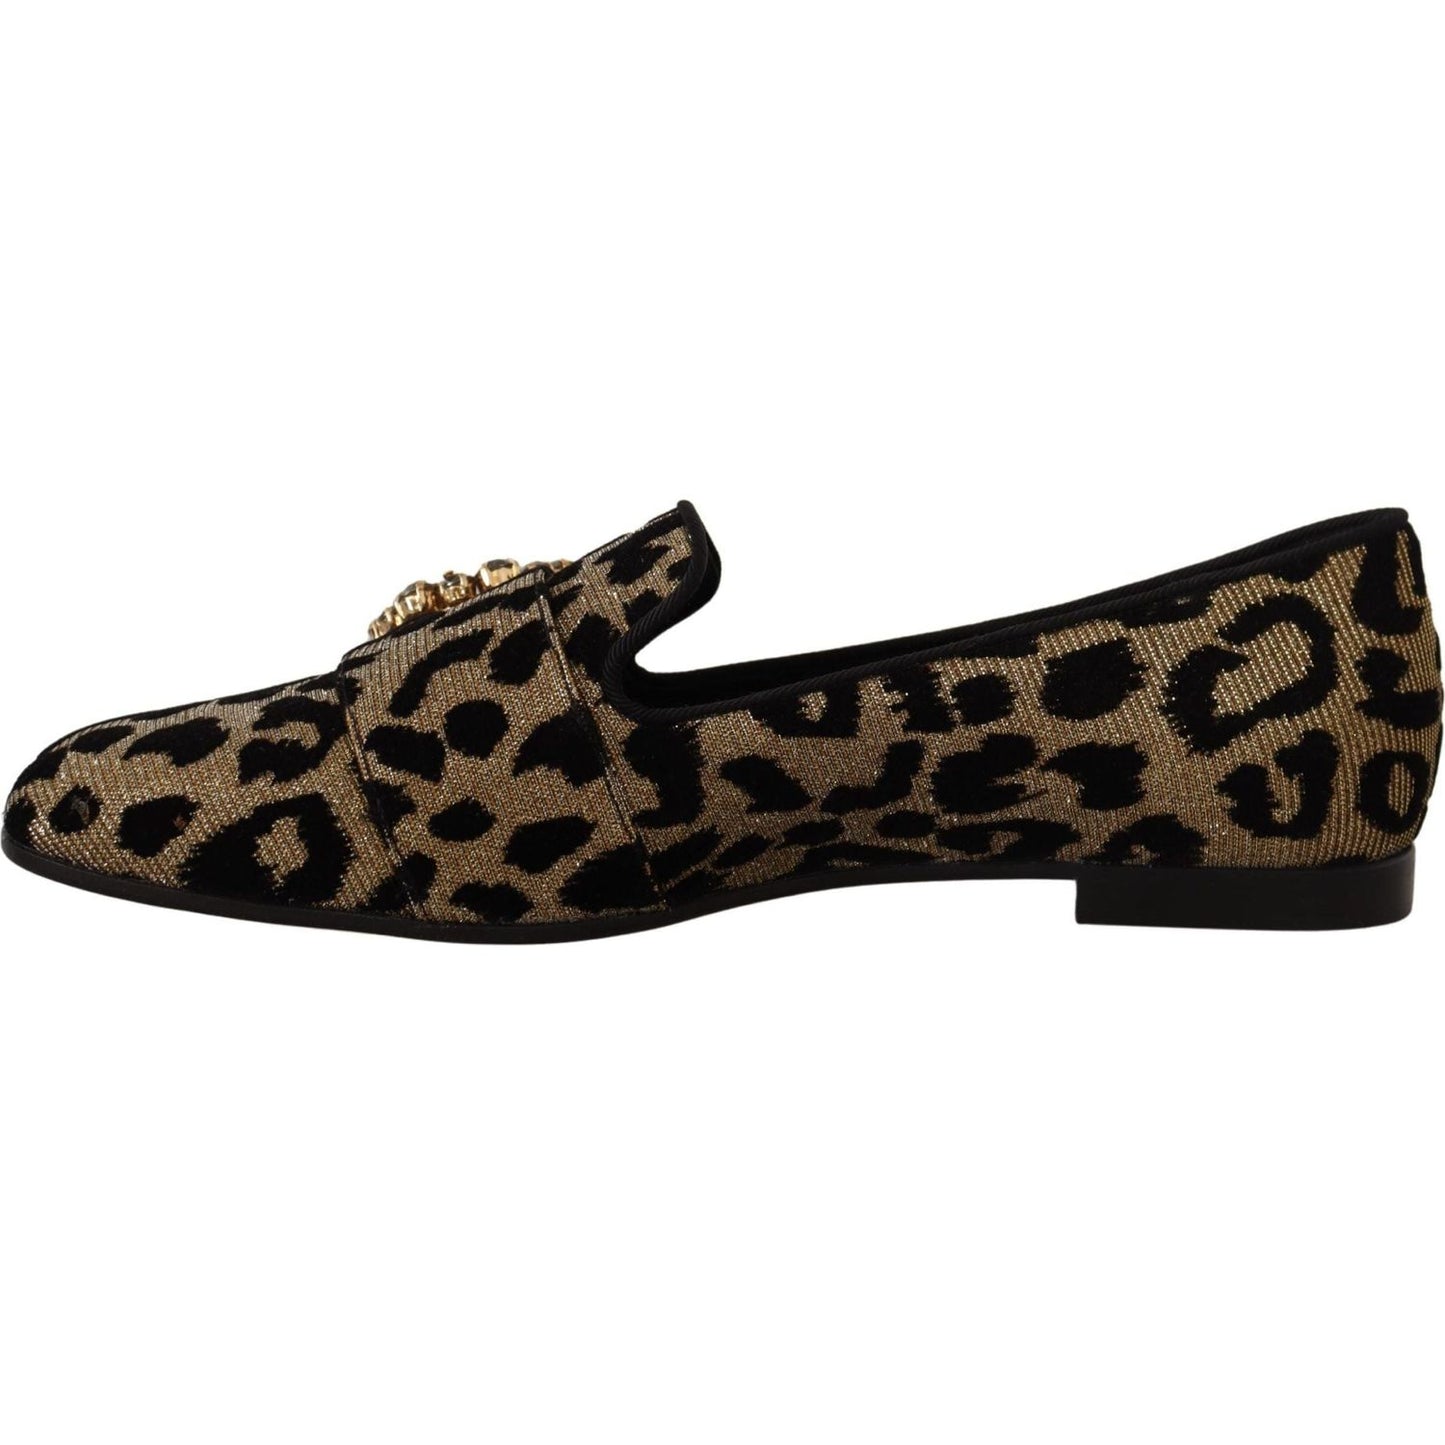 Dolce & Gabbana Elegant Leopard Crystal Gem Loafers gold-leopard-print-crystals-loafers-shoes IMG_0230-scaled-9e5bf5d8-511.jpg